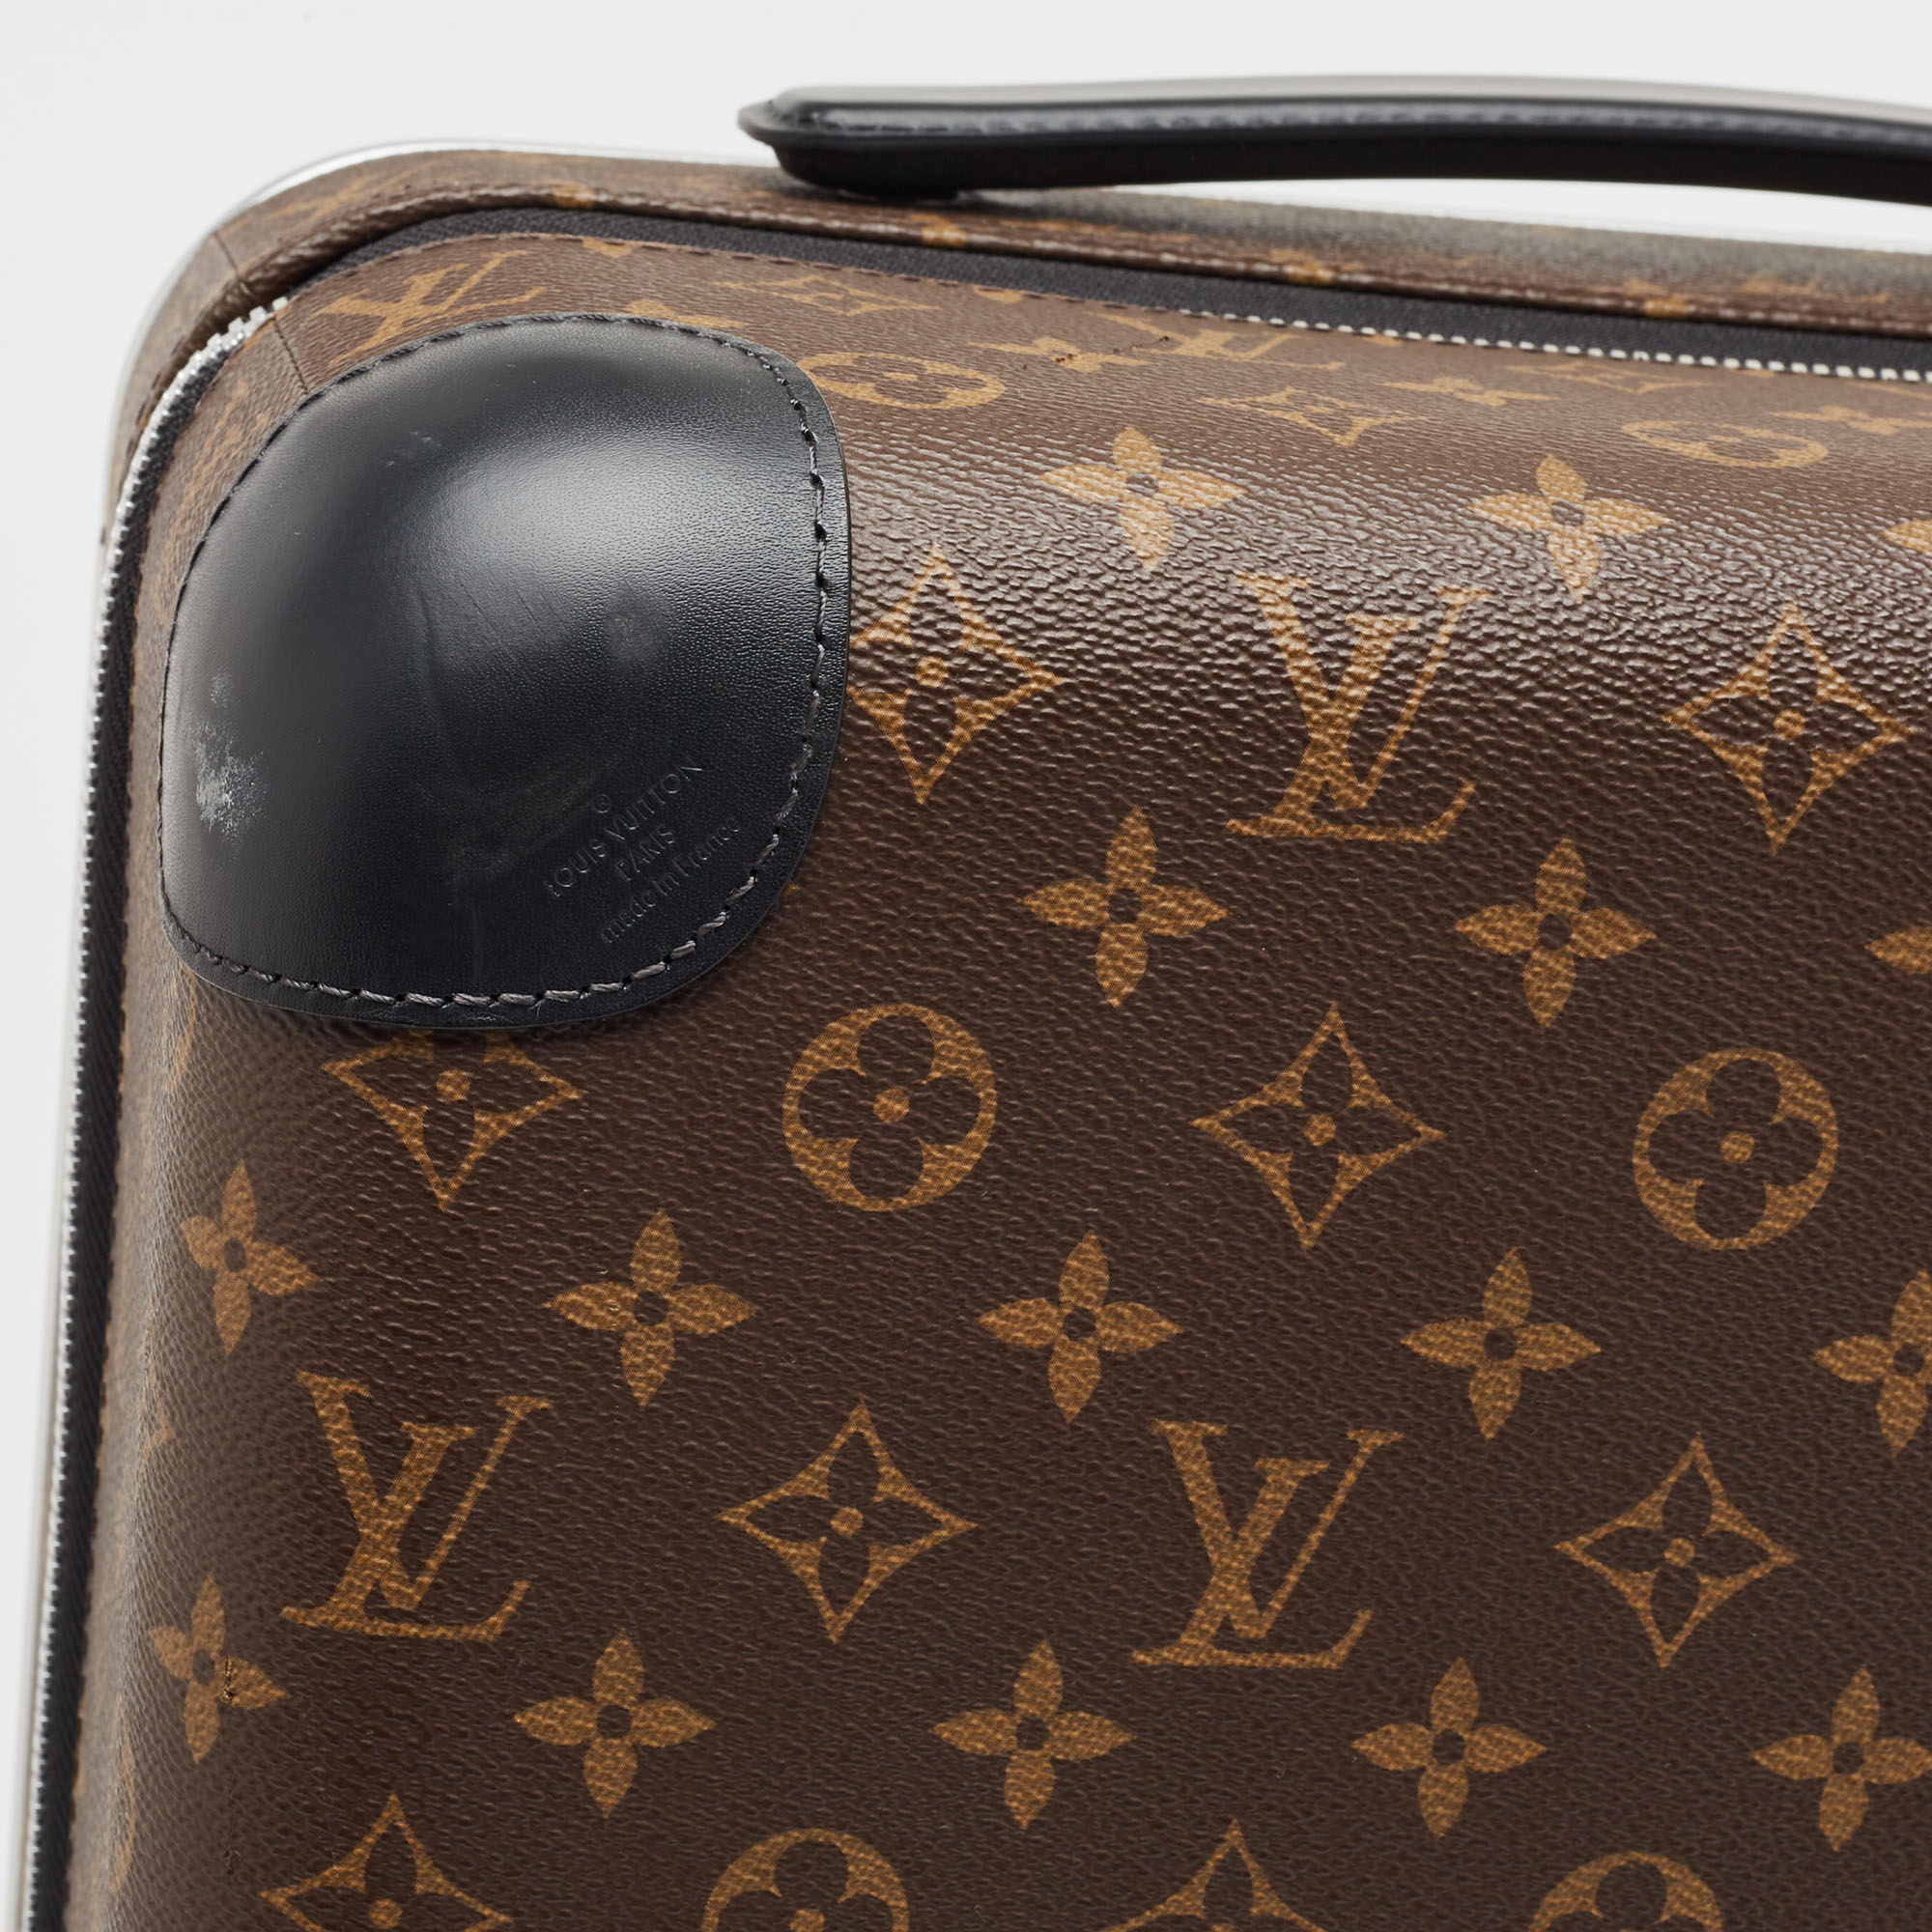 Louis Vuitton Monogram Canvas Horizon 55 Suitcase